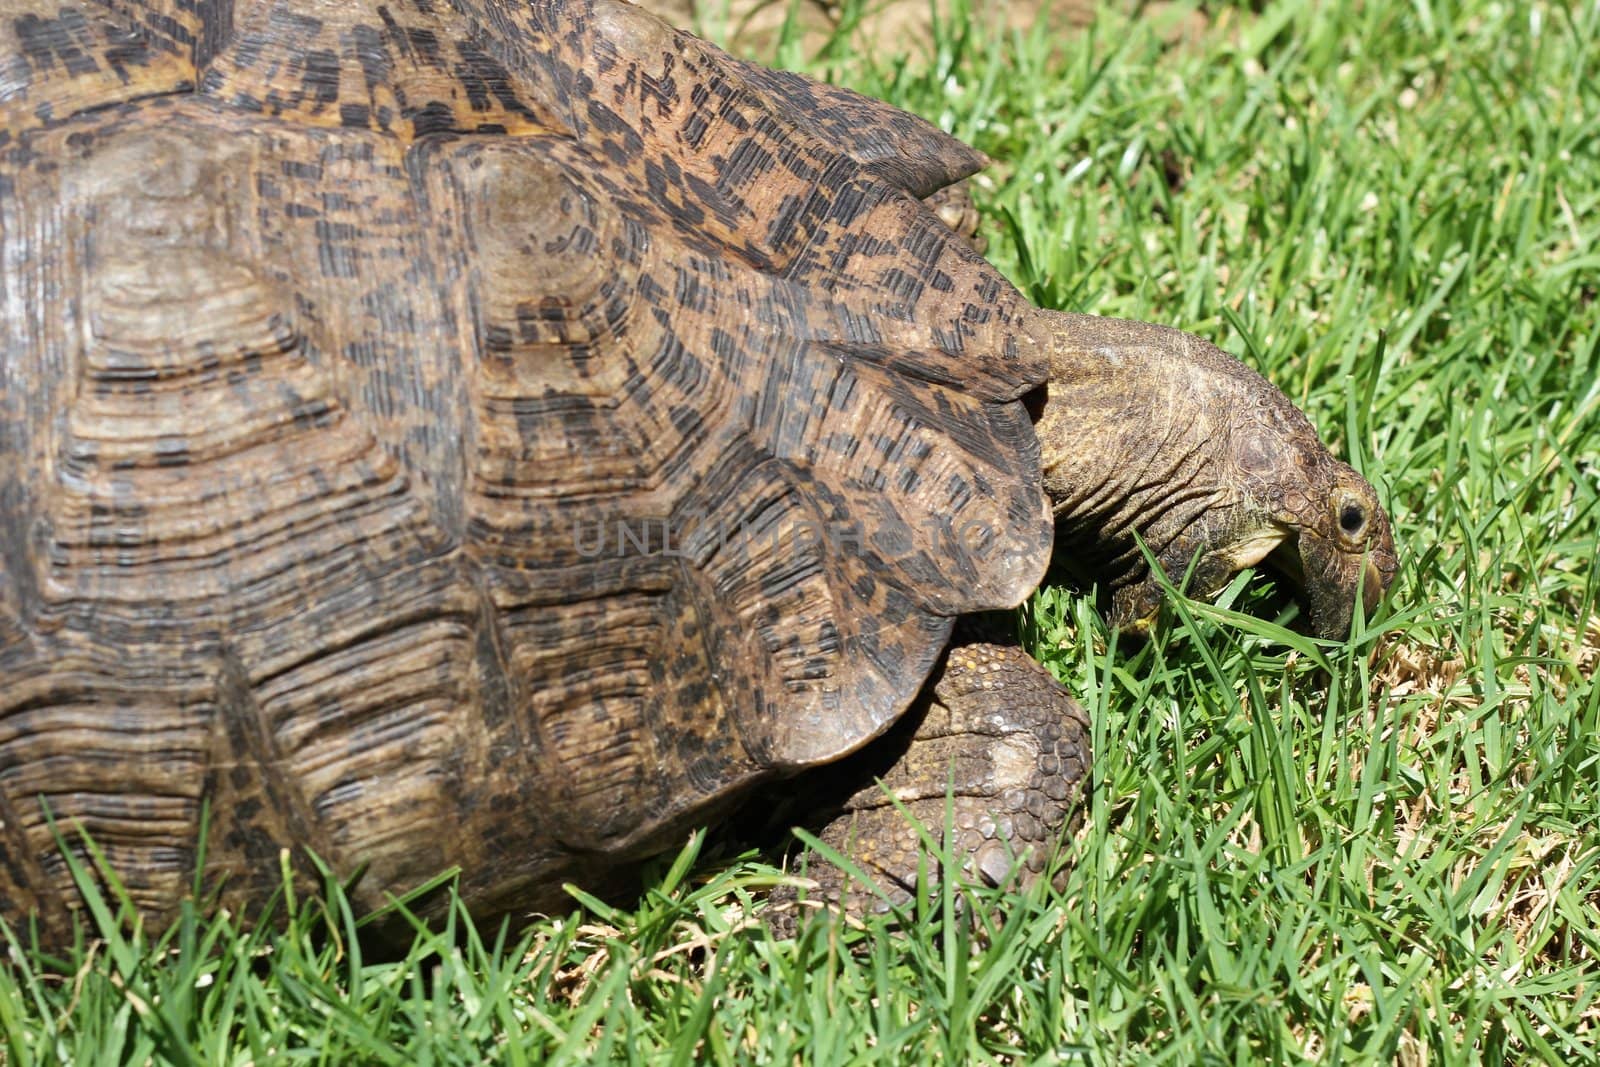 Turtle eating grass by dwaschnig_photo